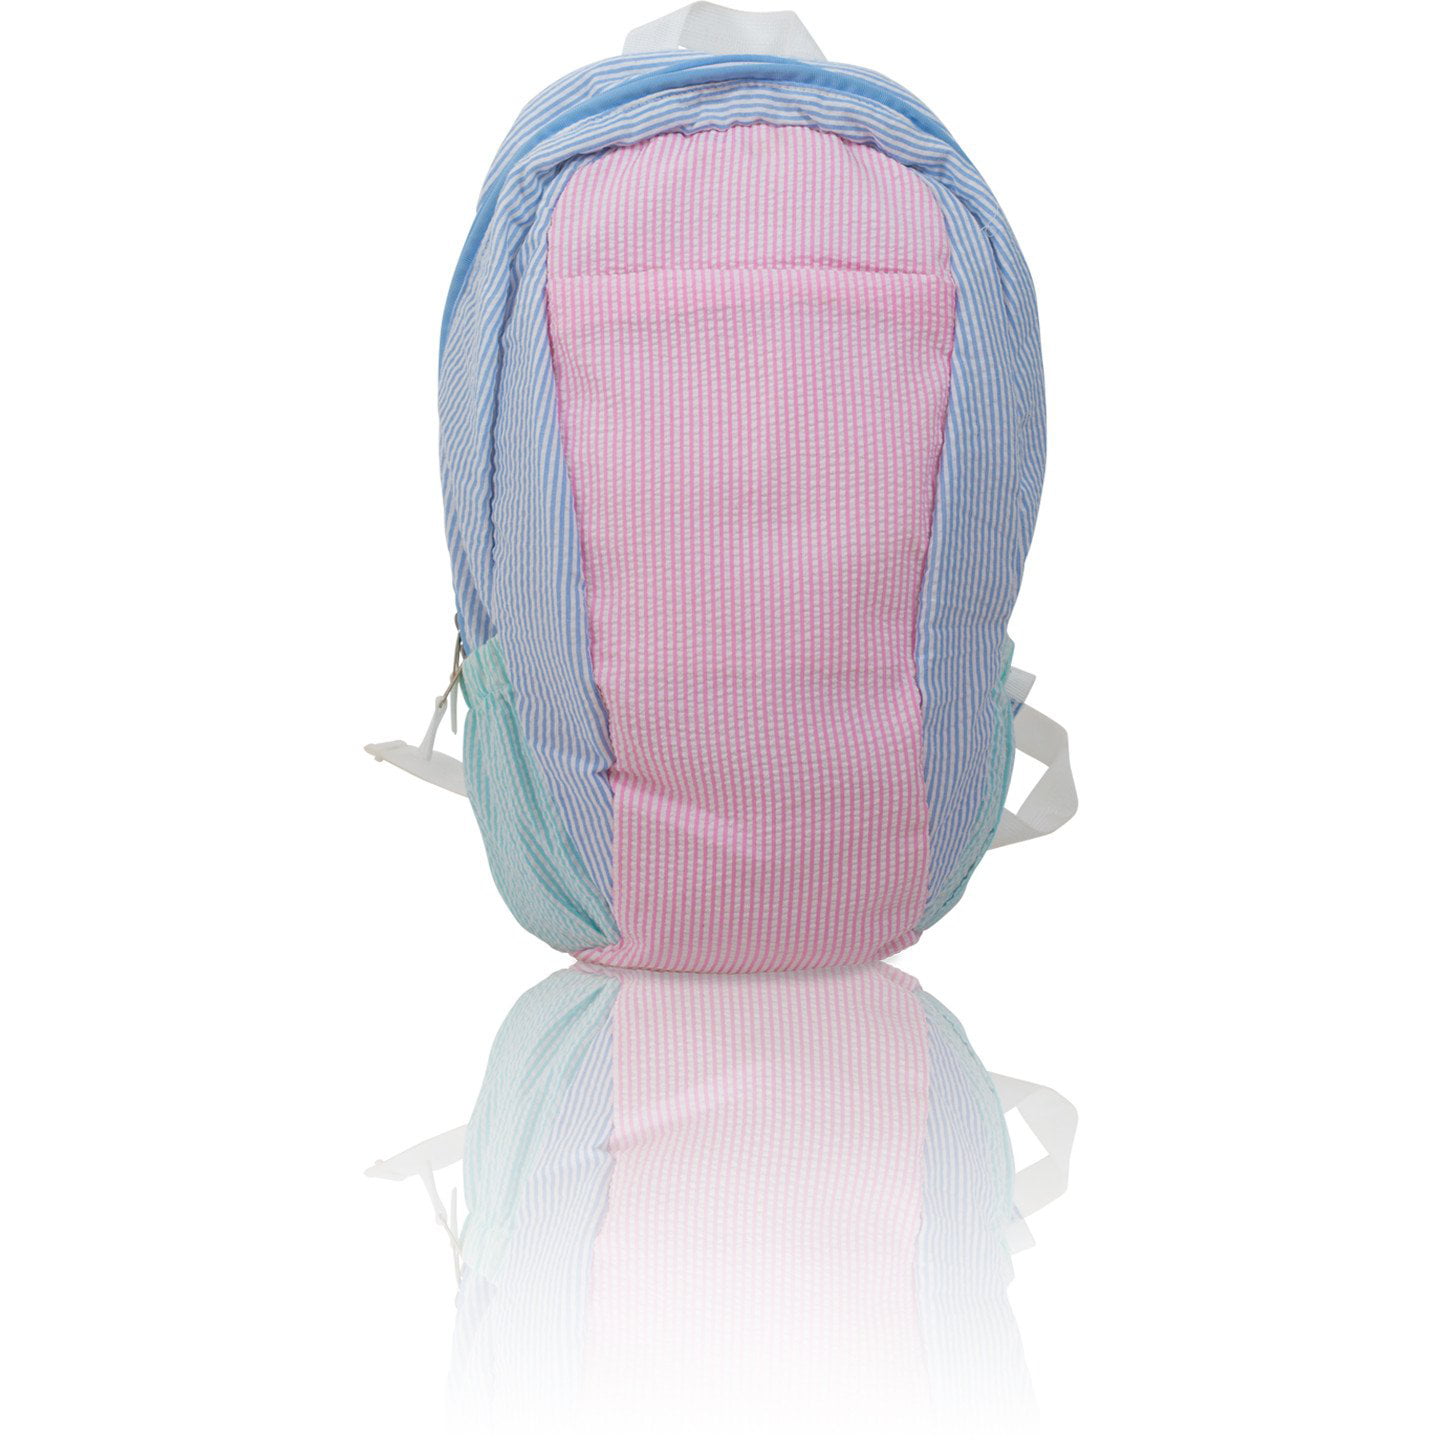 Sherrygeoffrey California Republic Turquoise Palm Student Bookbag Backpack Star Sky Laptop Bag